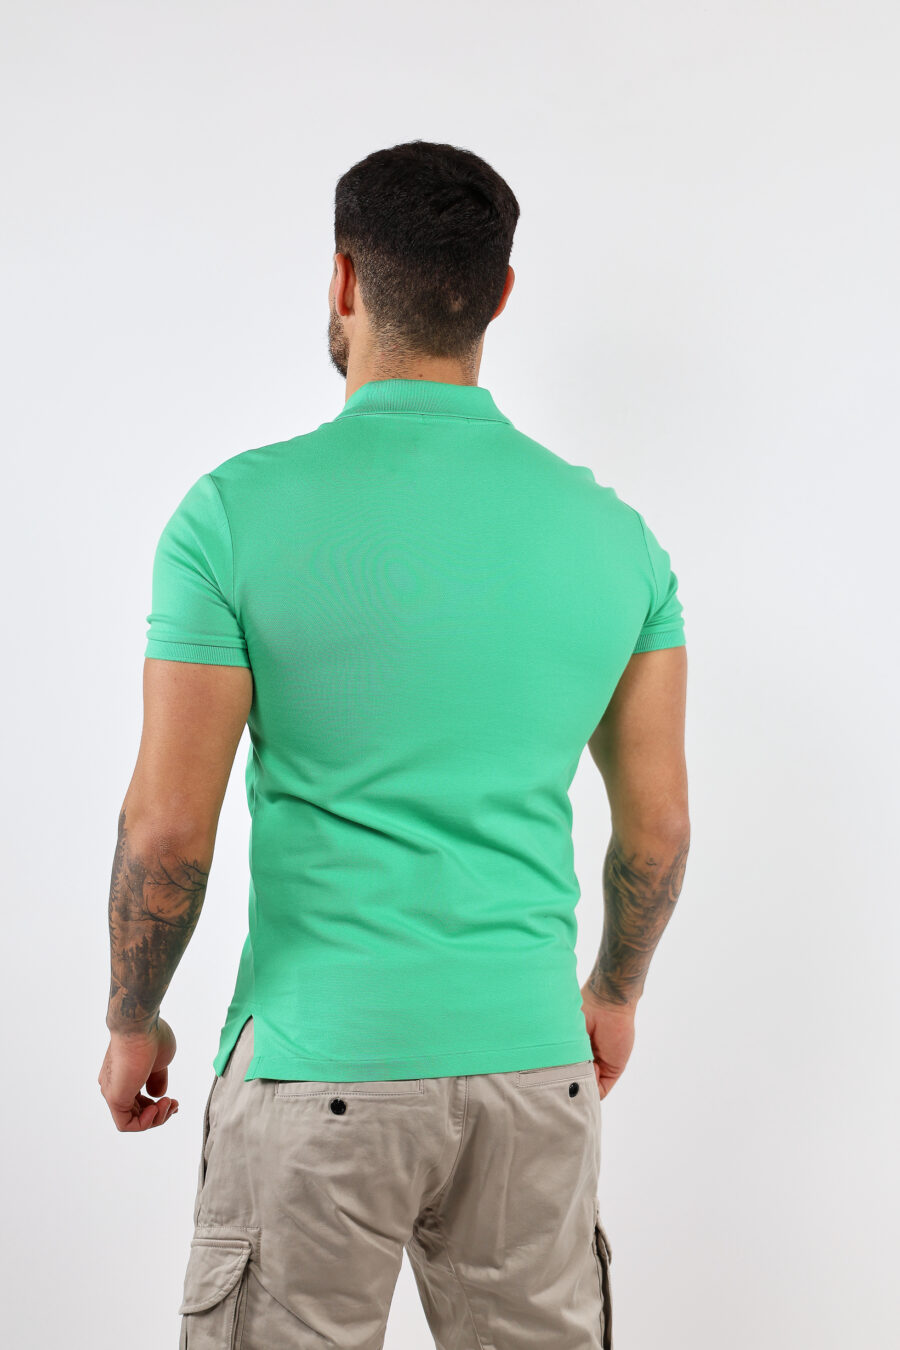 T-shirt vert et bleu avec mini-logo "polo" - BLS Fashion 175